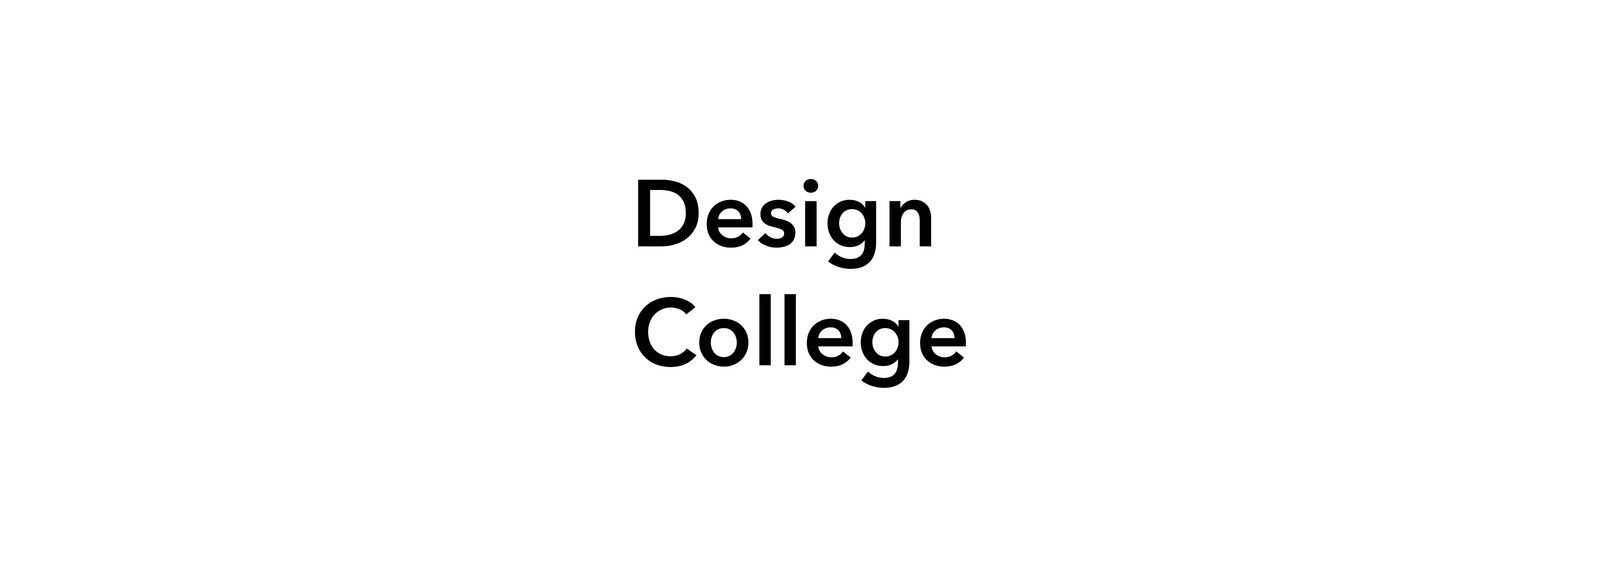 Design College 運営 02 Design College Note